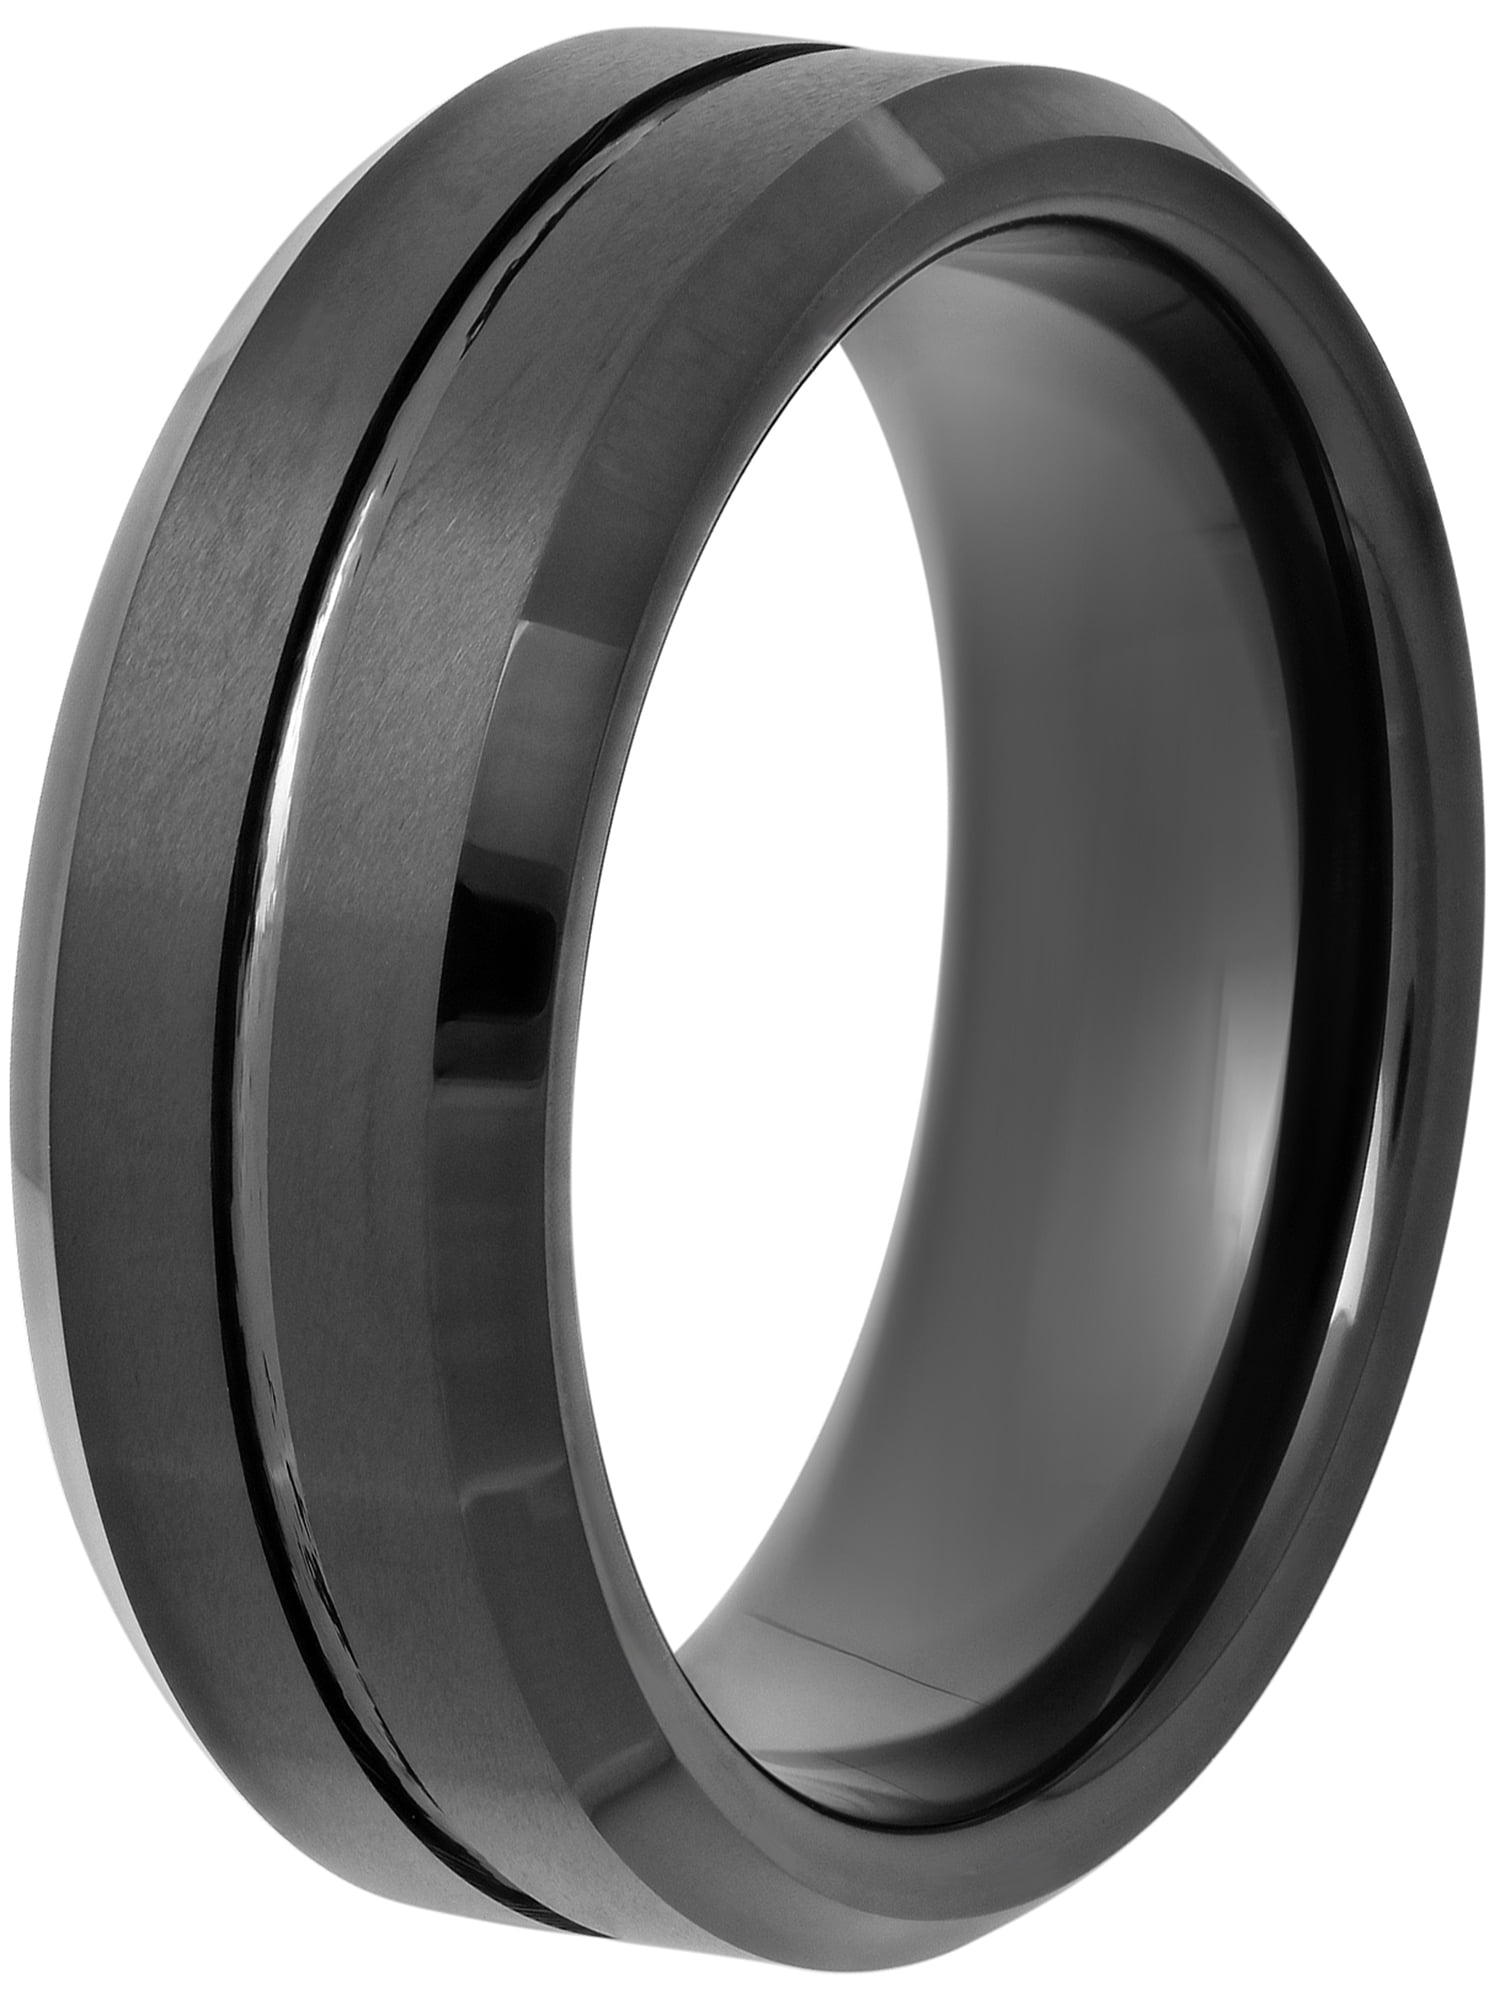 Black Tungsten Carbide Ceramic Bar Magnetic Bracelet w/ Cubic Zirconia Stones 